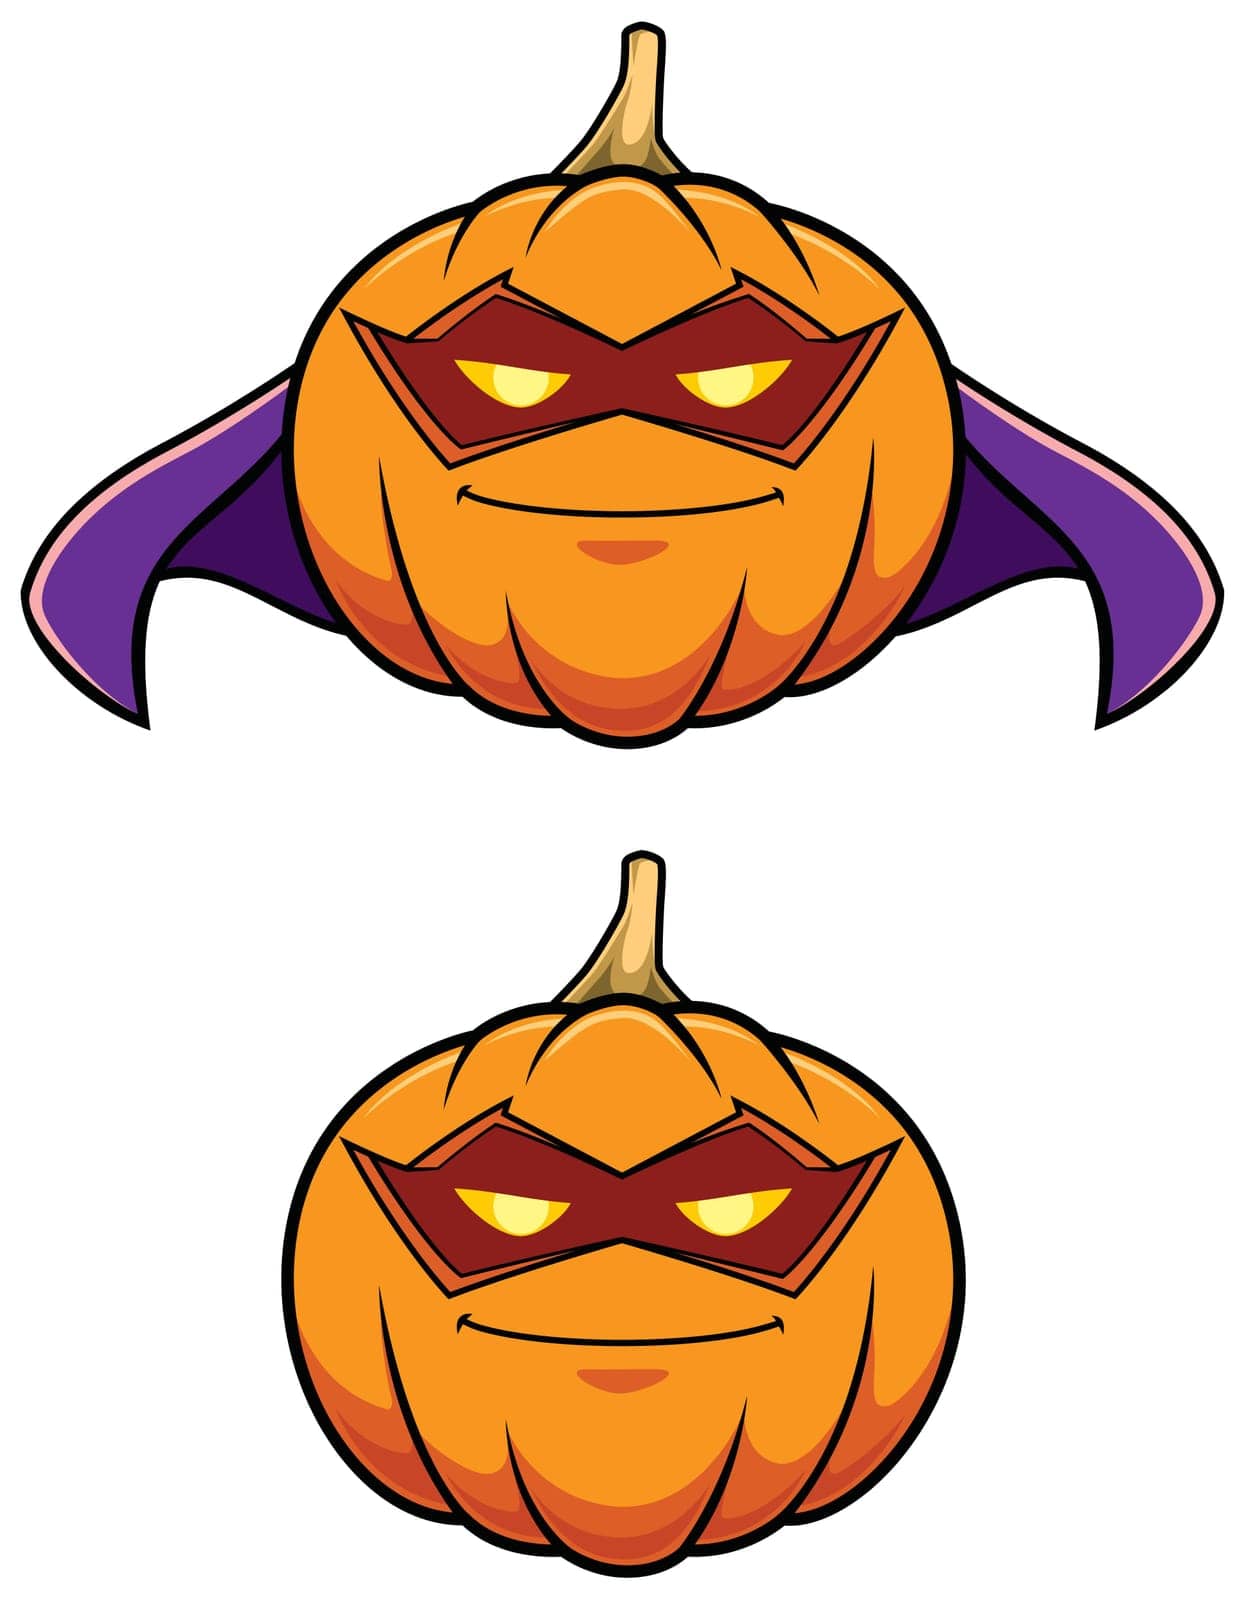 Pumpkin Superhero Mascot by Malchev